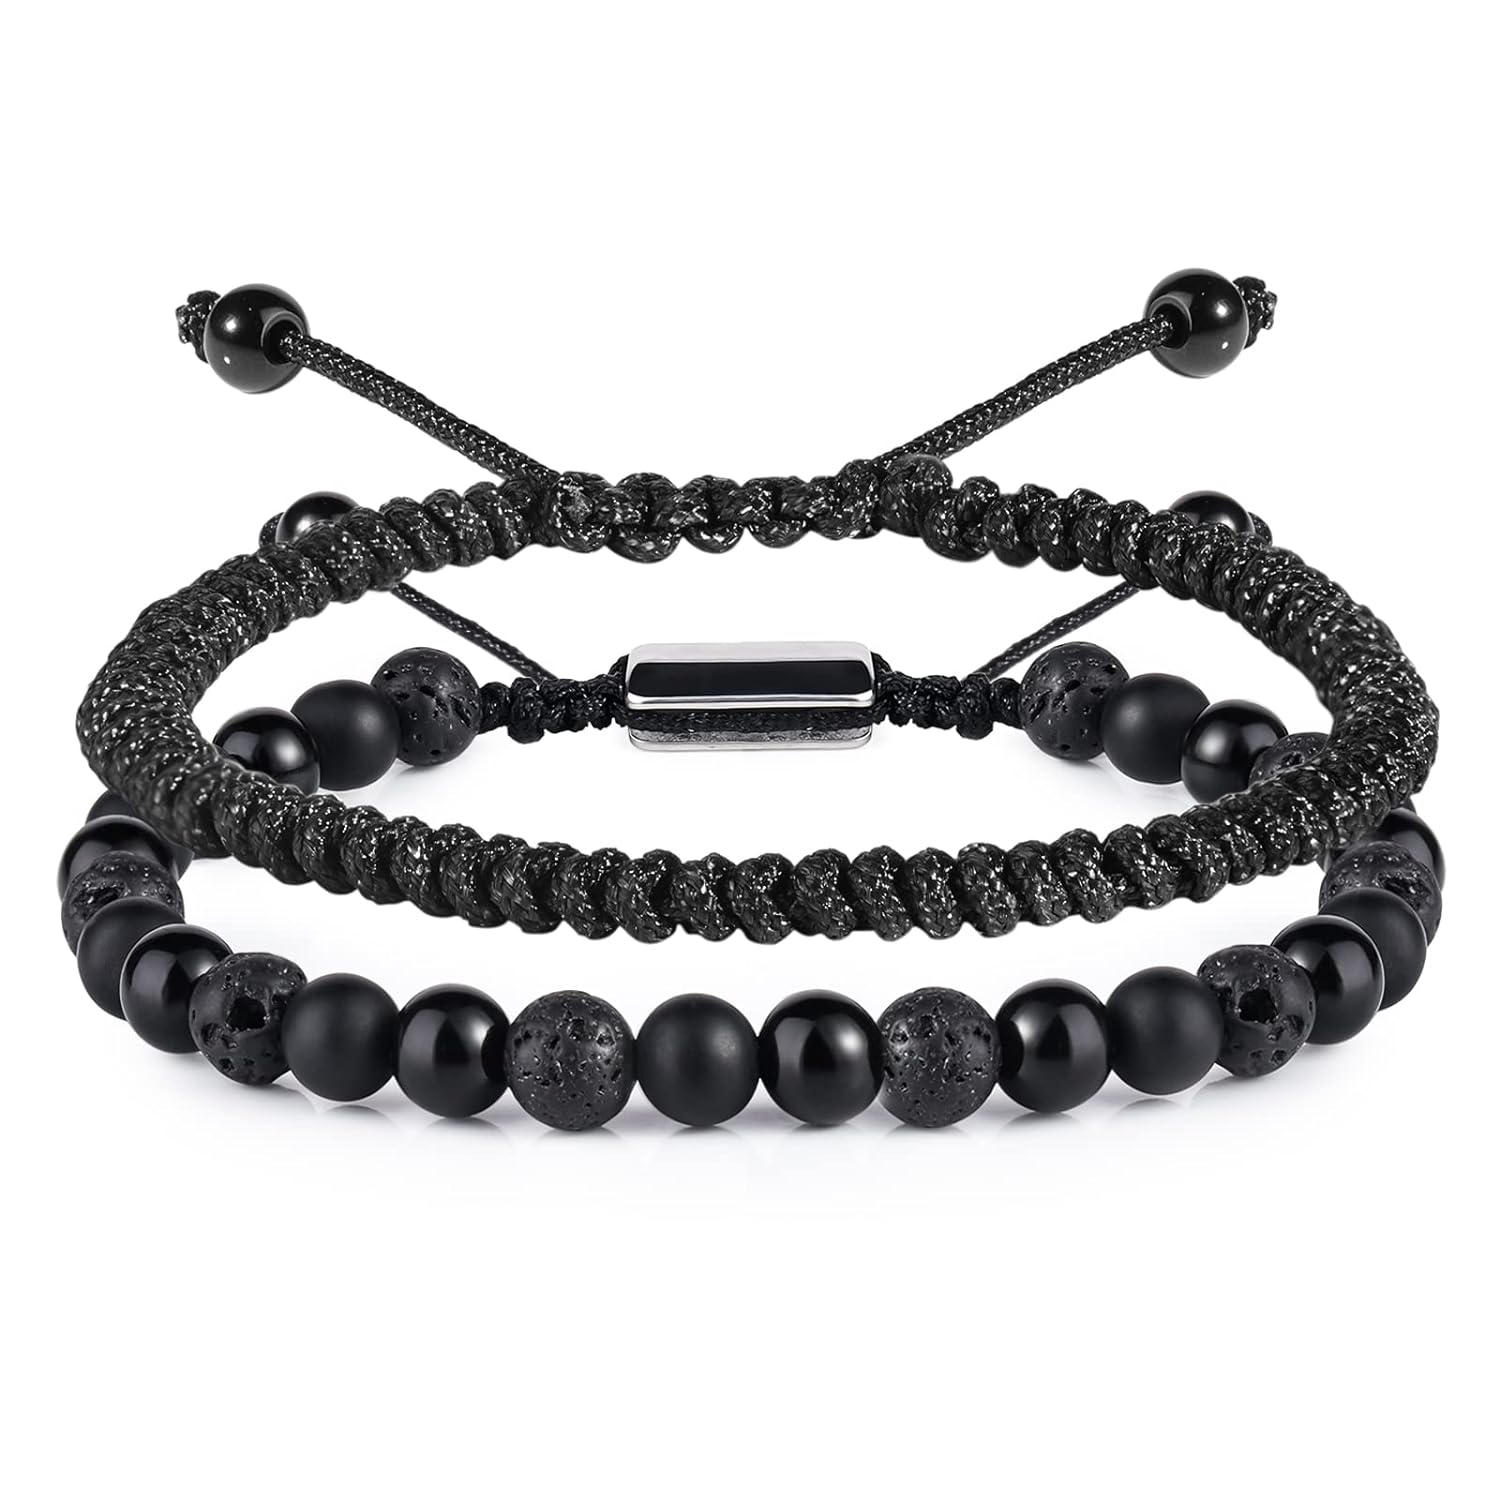 CARITATE Black Beaded Bracelets for Men Boys - 6mm Obsidian Onyx Lava Beads Mens Bracelet Set for Couples - Valentines Day Birthday Gifts Mens Jewelry for Boyfriend Husband Him